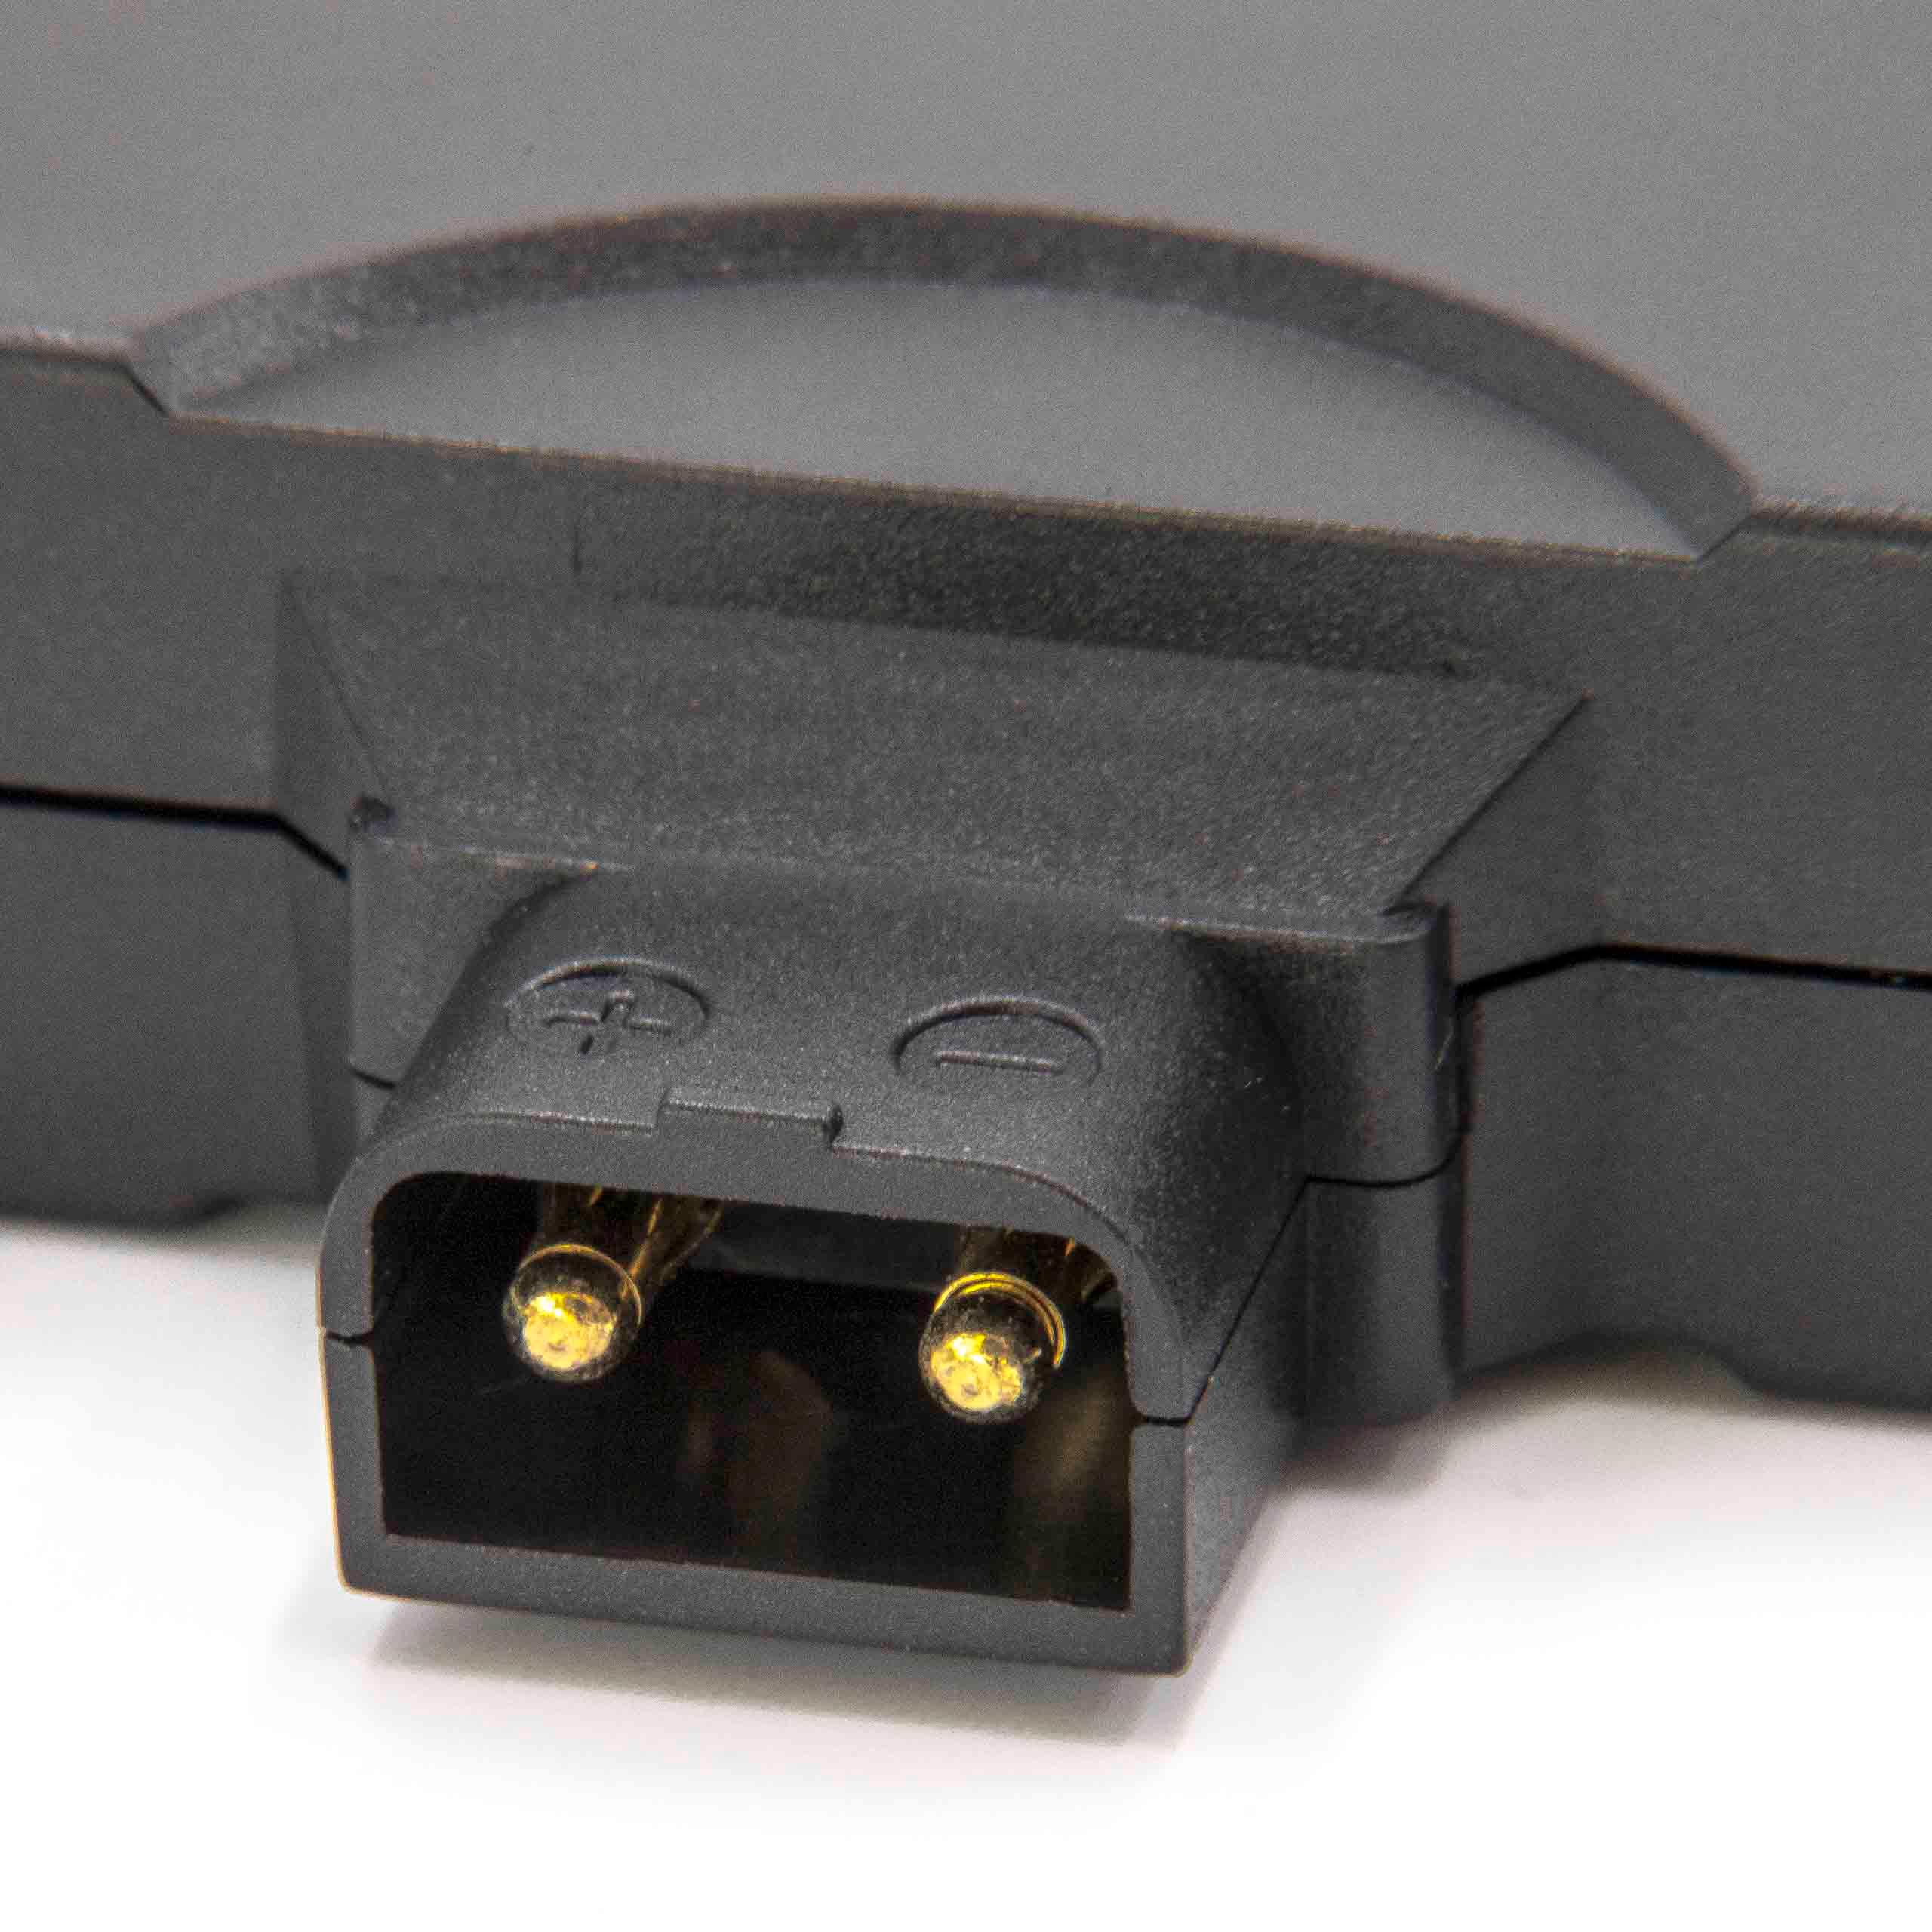 vhbw adattatore D-Tap (m) a USB (femmina) per le batterie della fotocamera